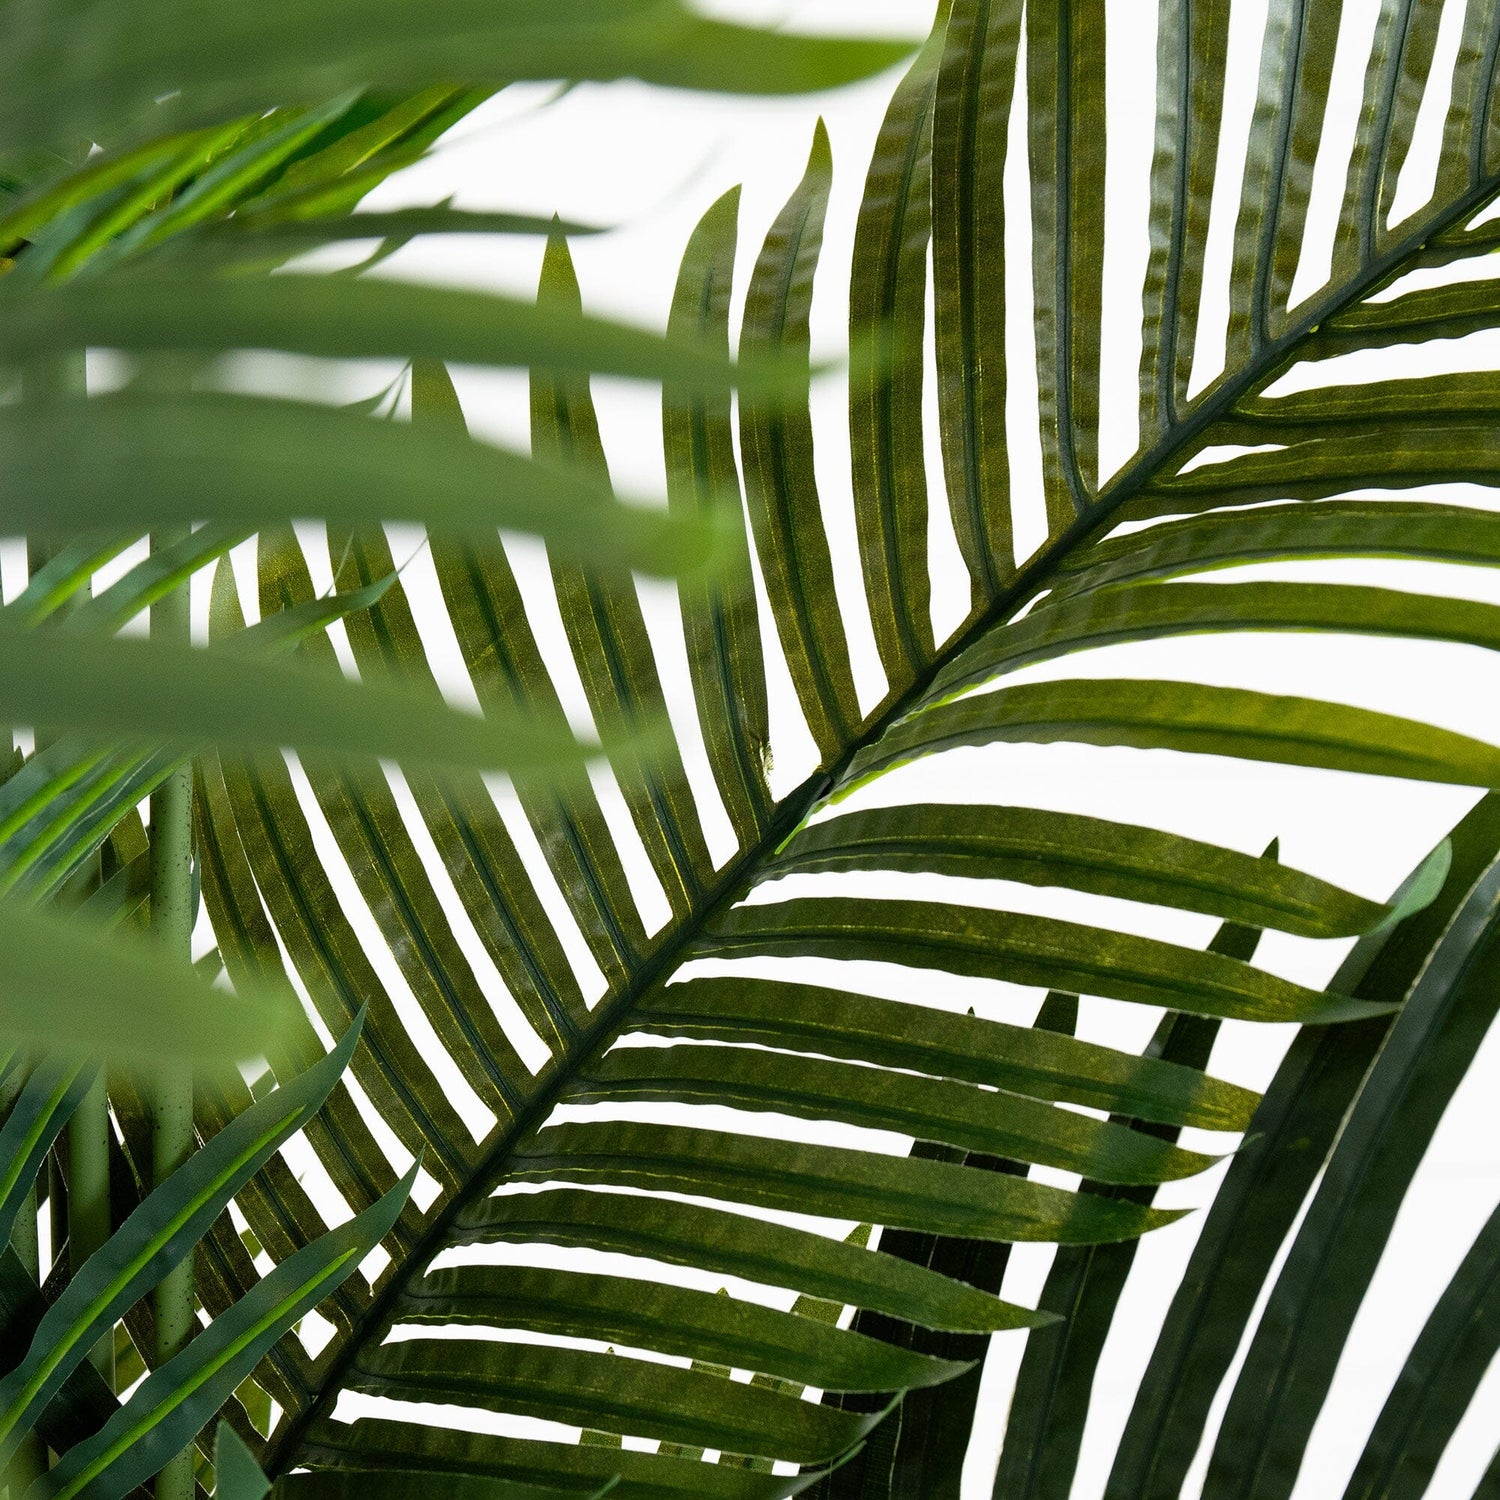 8’ Artificial Paradise Palm Tree